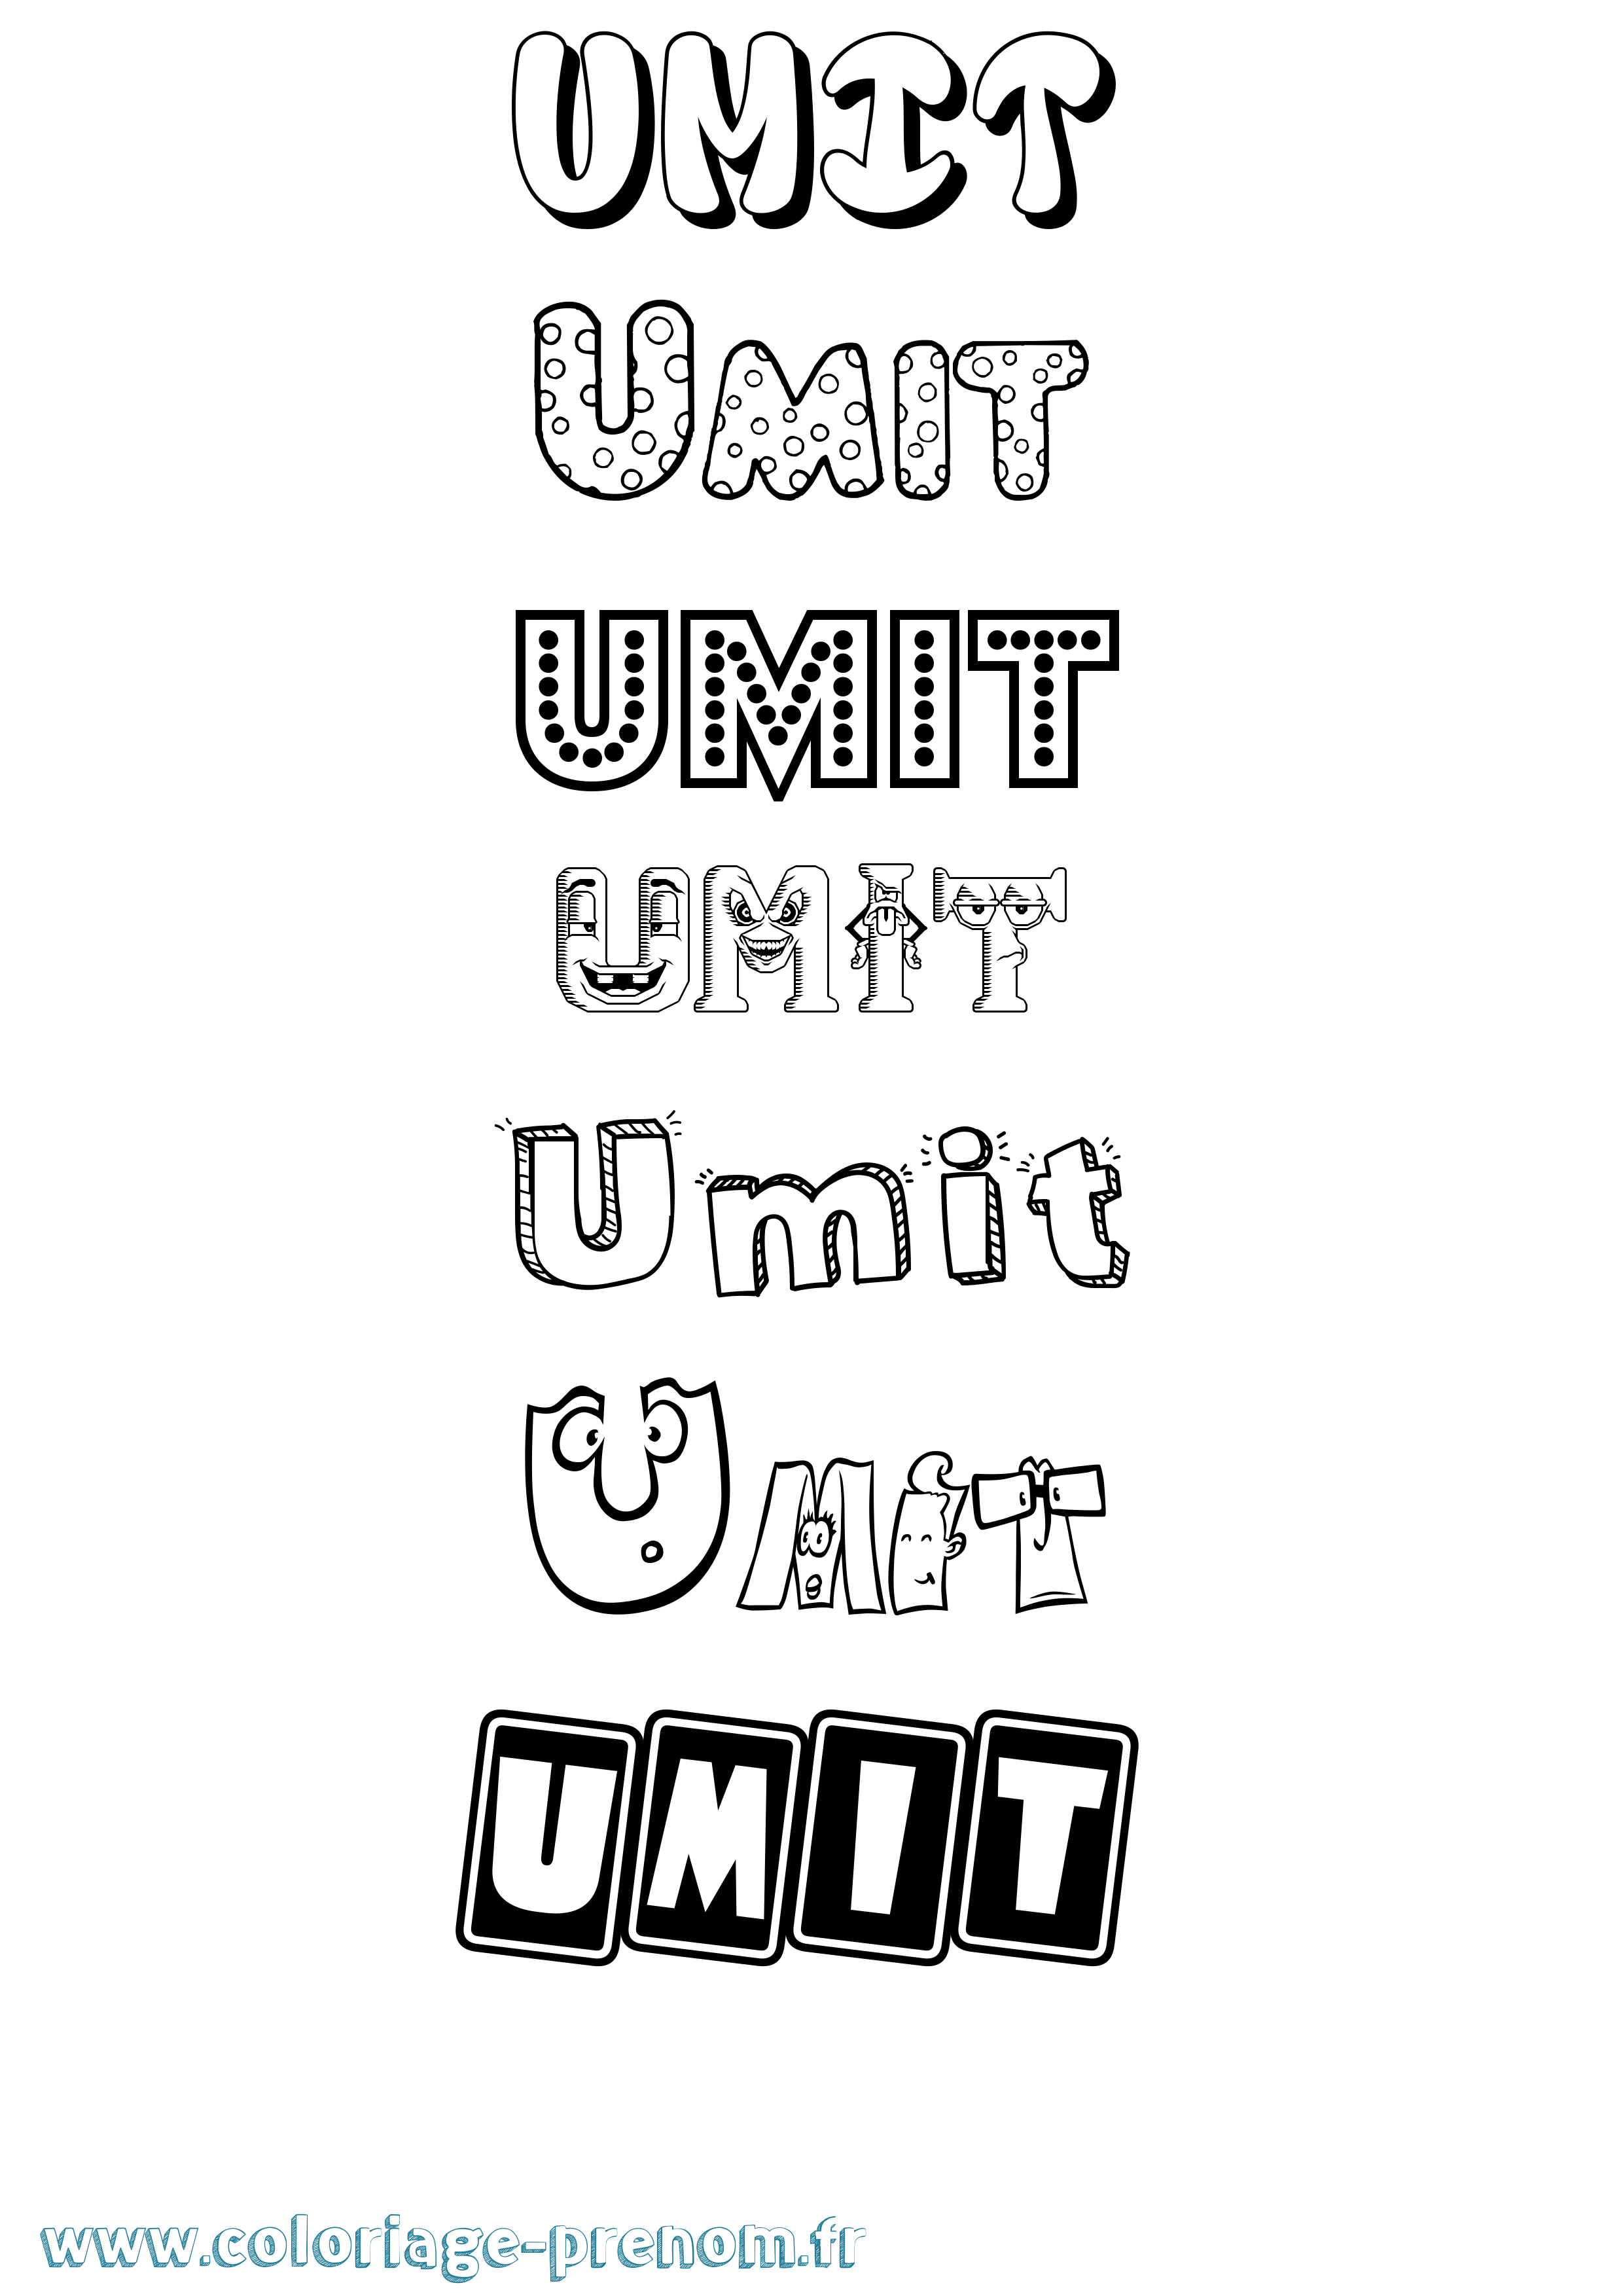 Coloriage prénom Umit Fun